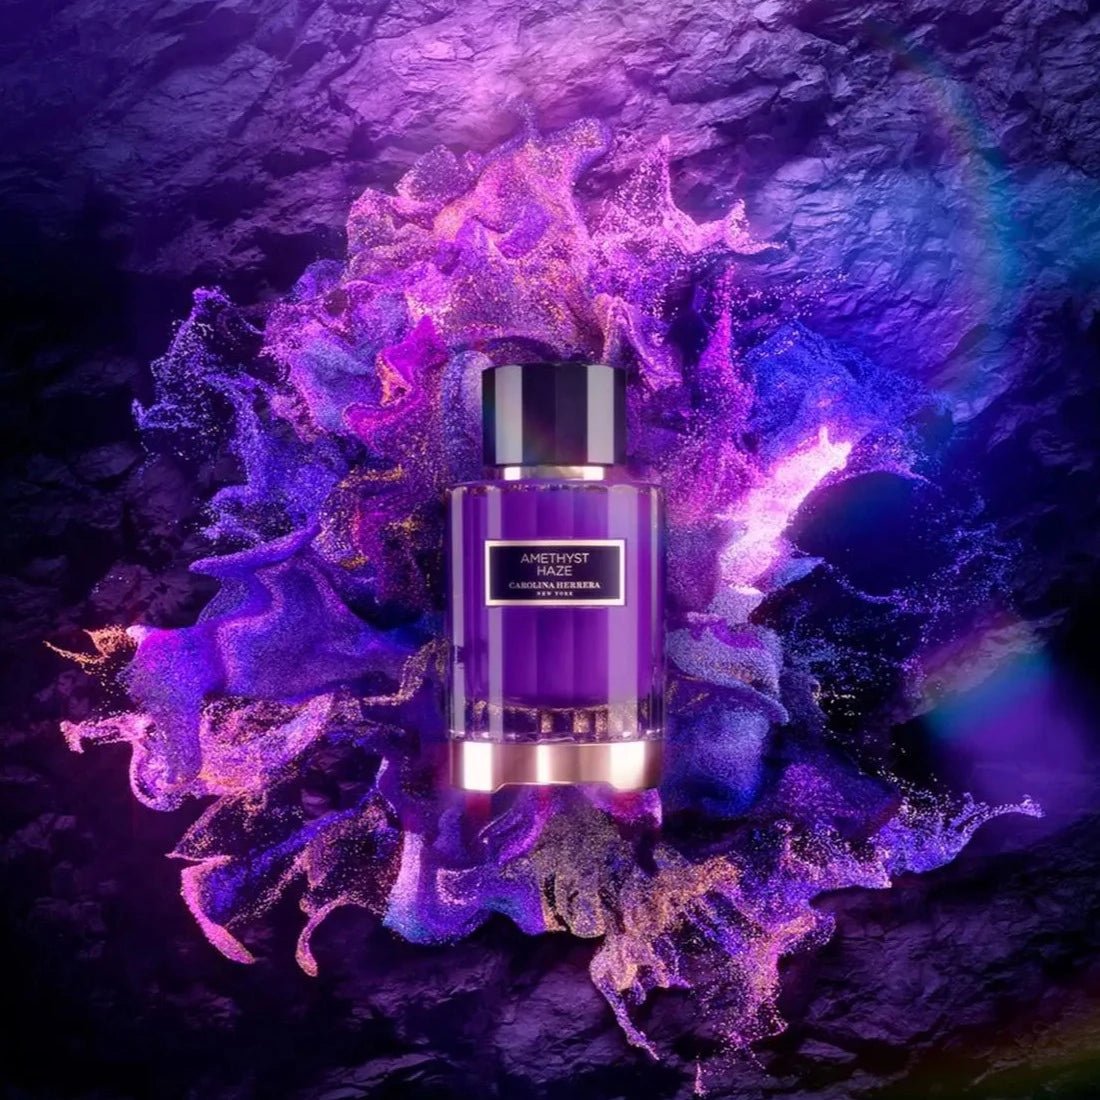 Carolina Herrera Amethyst Haze EDP | My Perfume Shop Australia